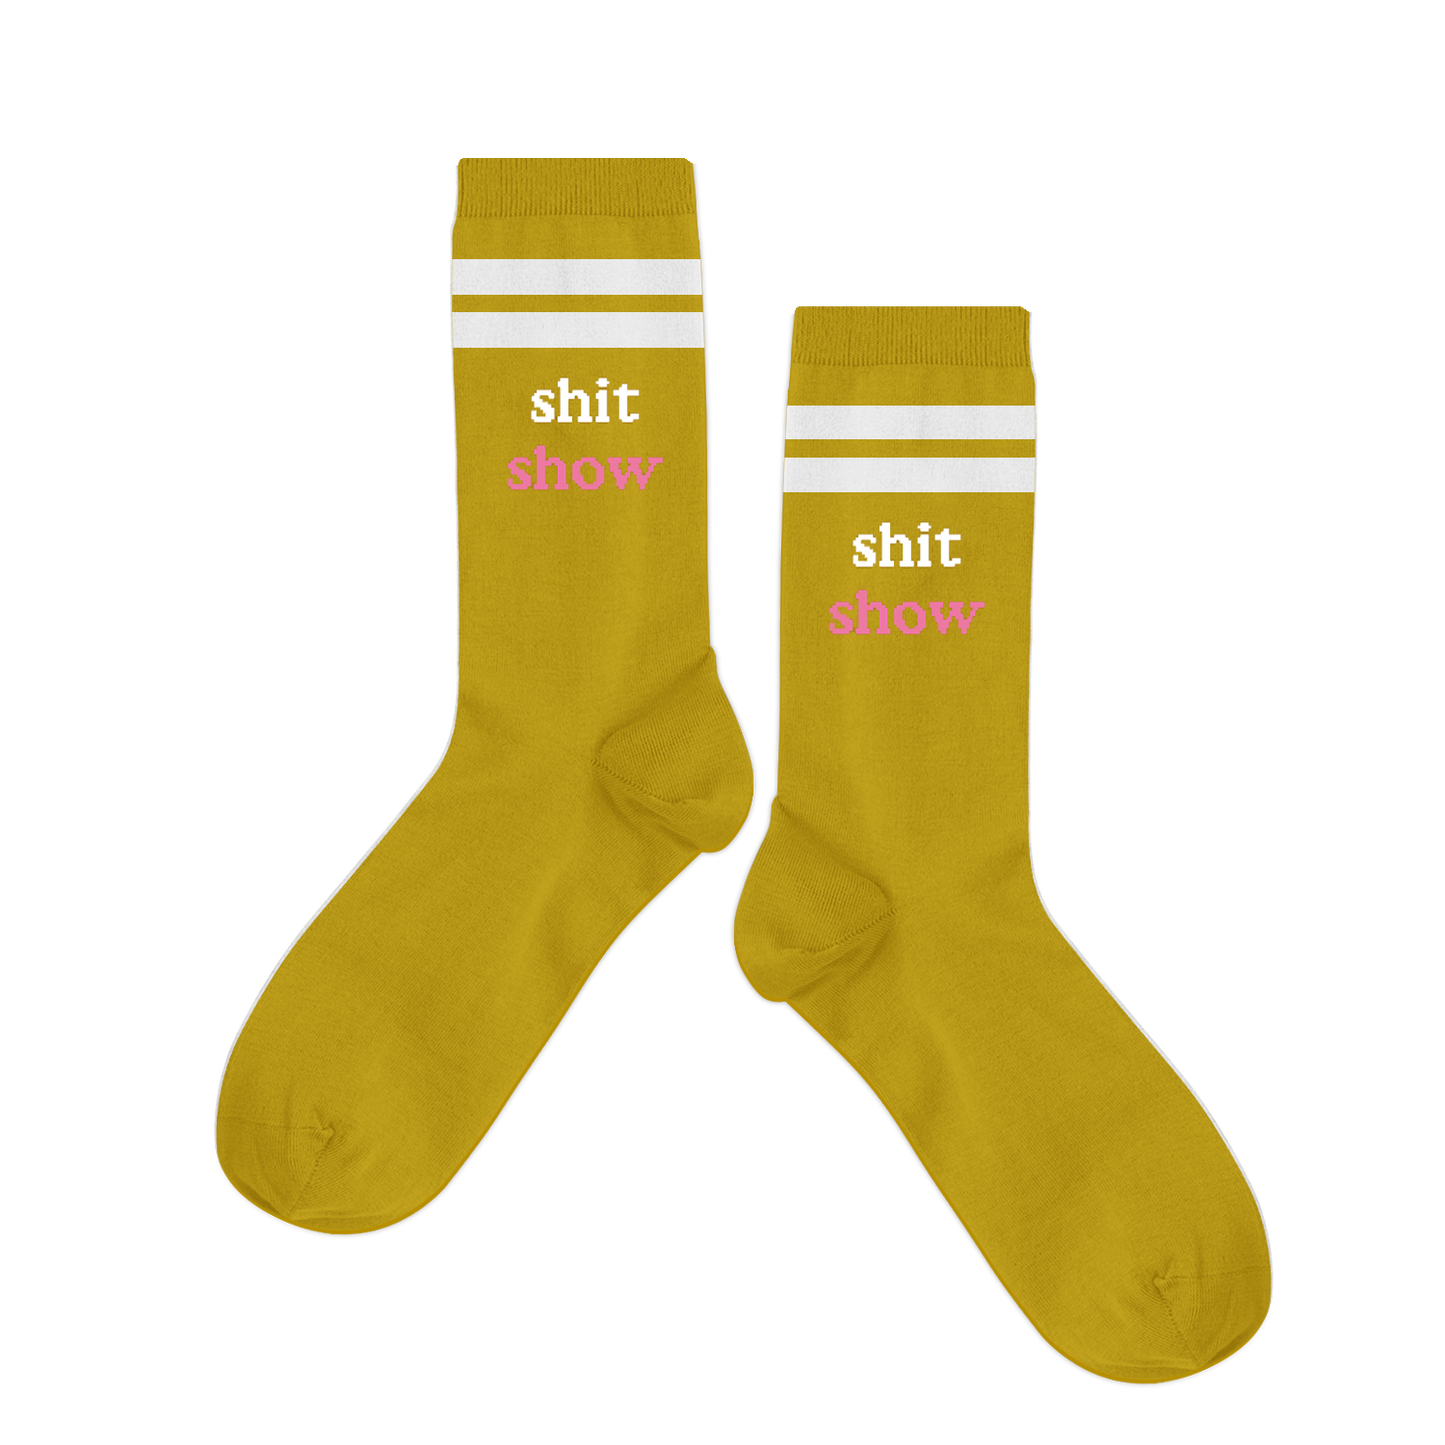 Shit Show Socks